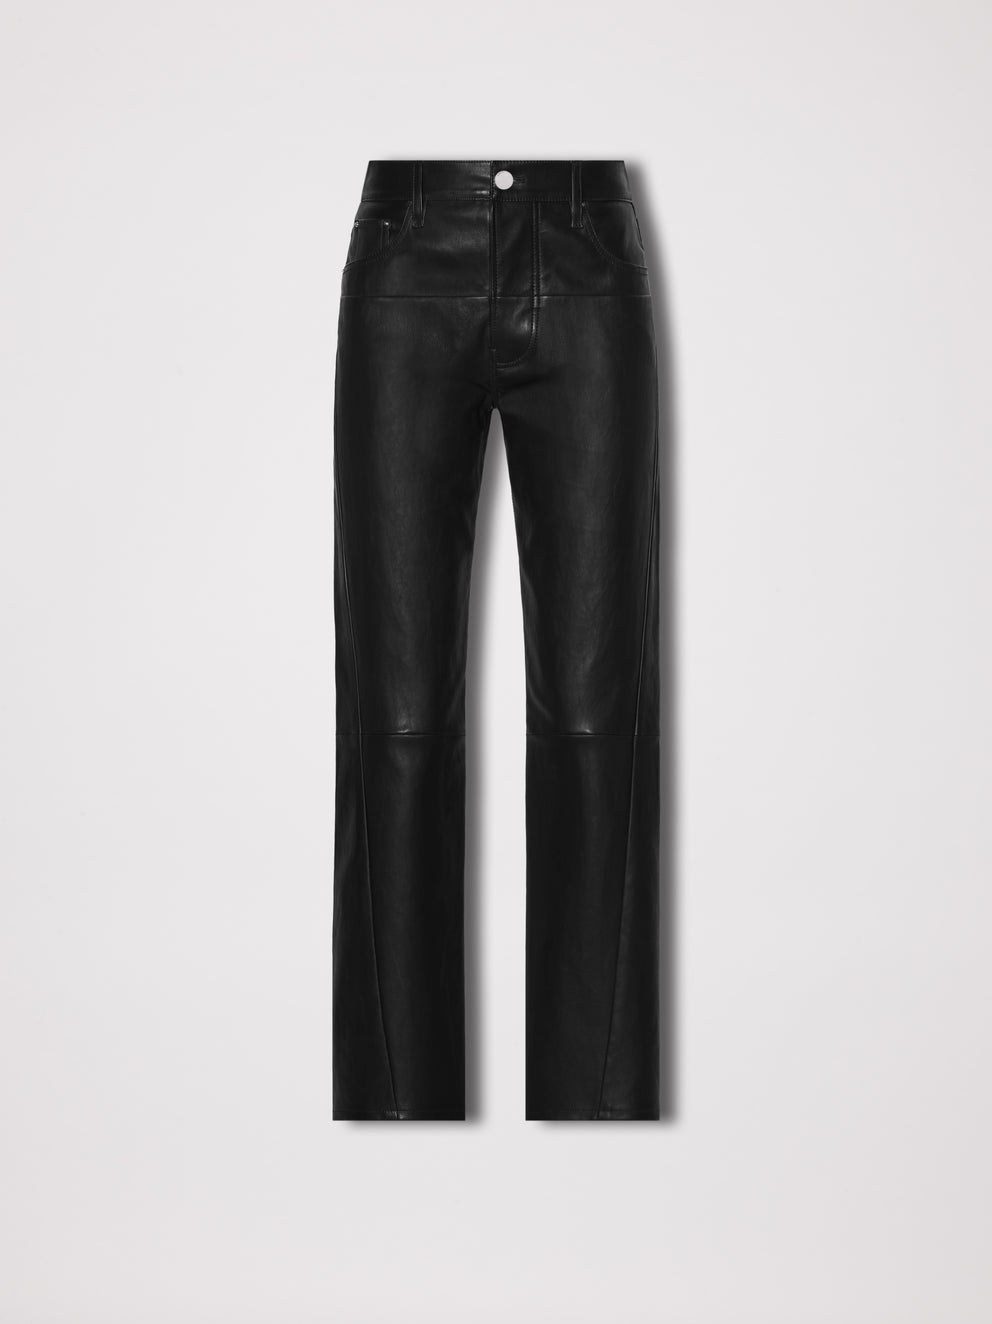 Leather Amiri Cuero 5 Pocket Directo Pant Mujer Negras | 2649XGSEU